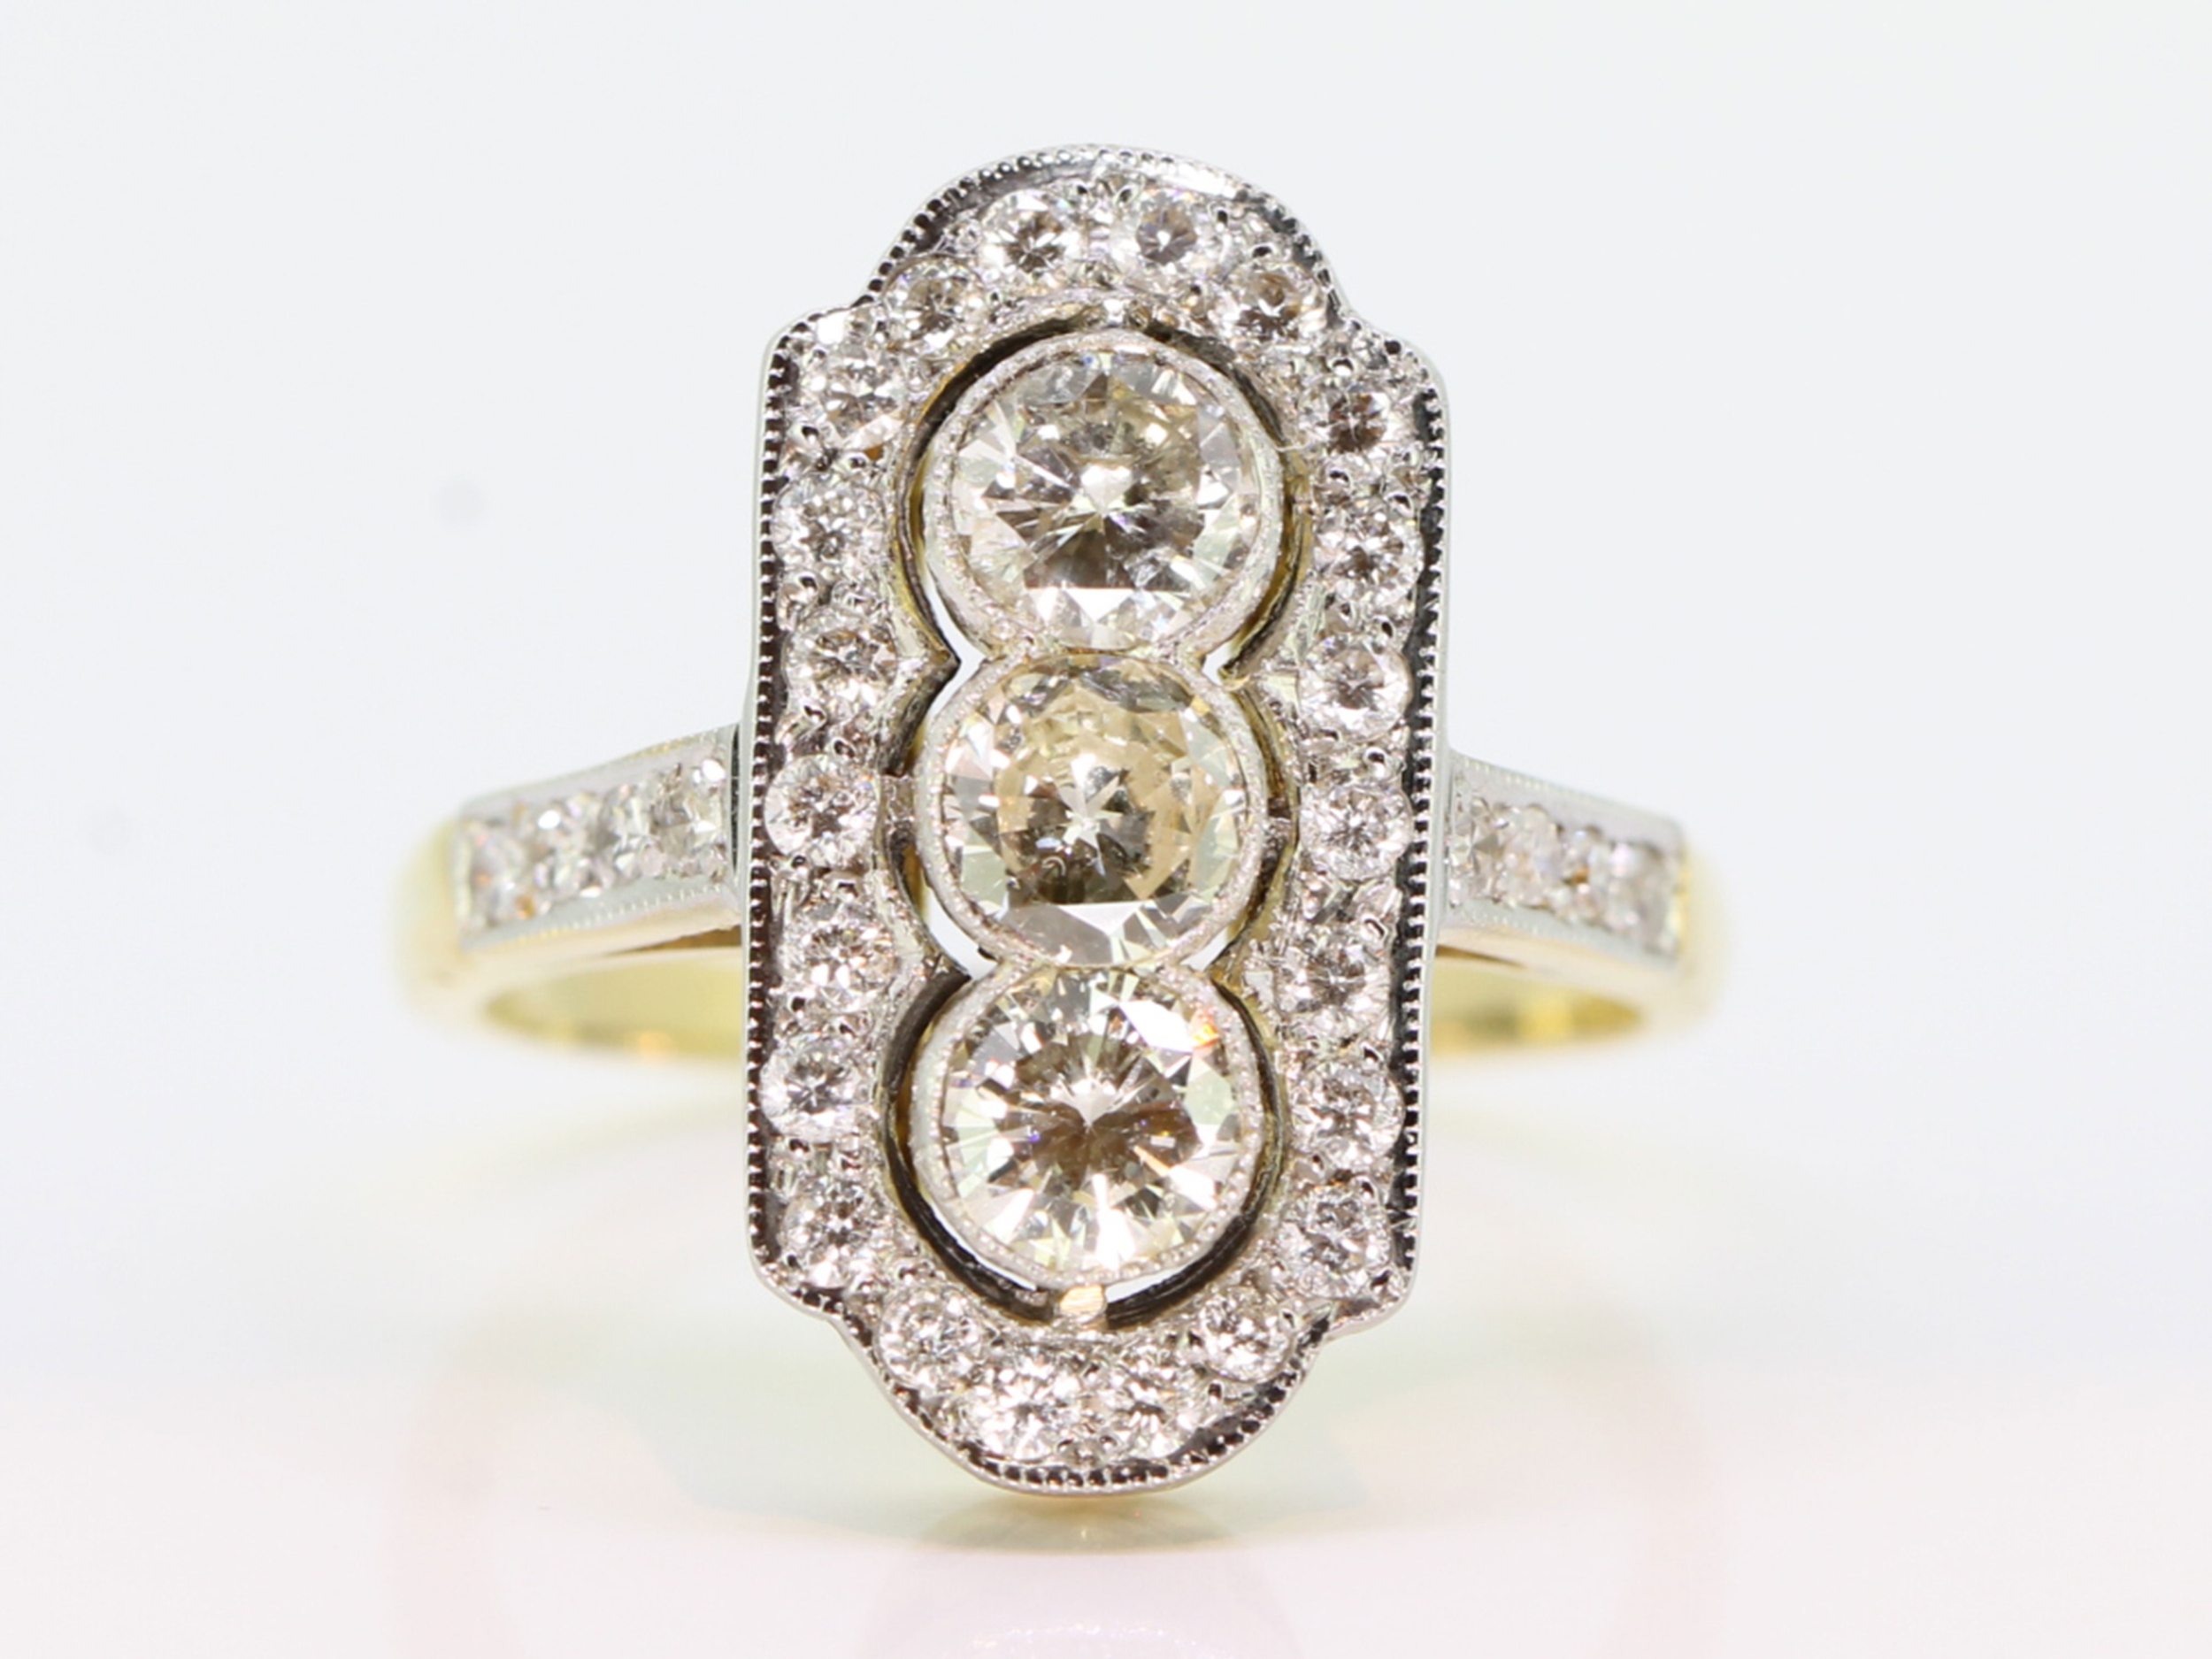 Stunning 18 carat gold diamond plaque ring